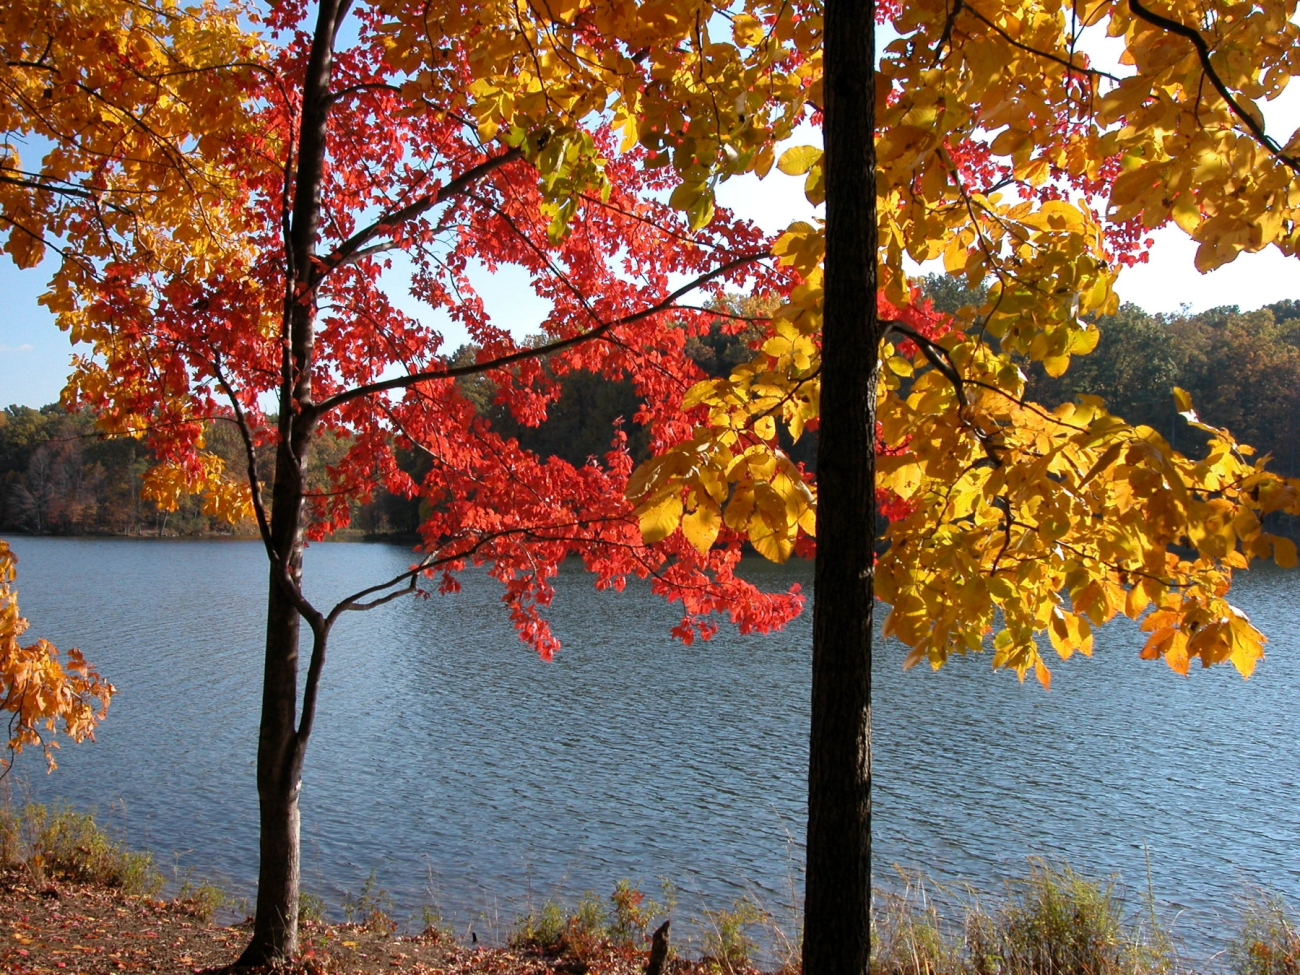 Autumn colors on Clopper Lake